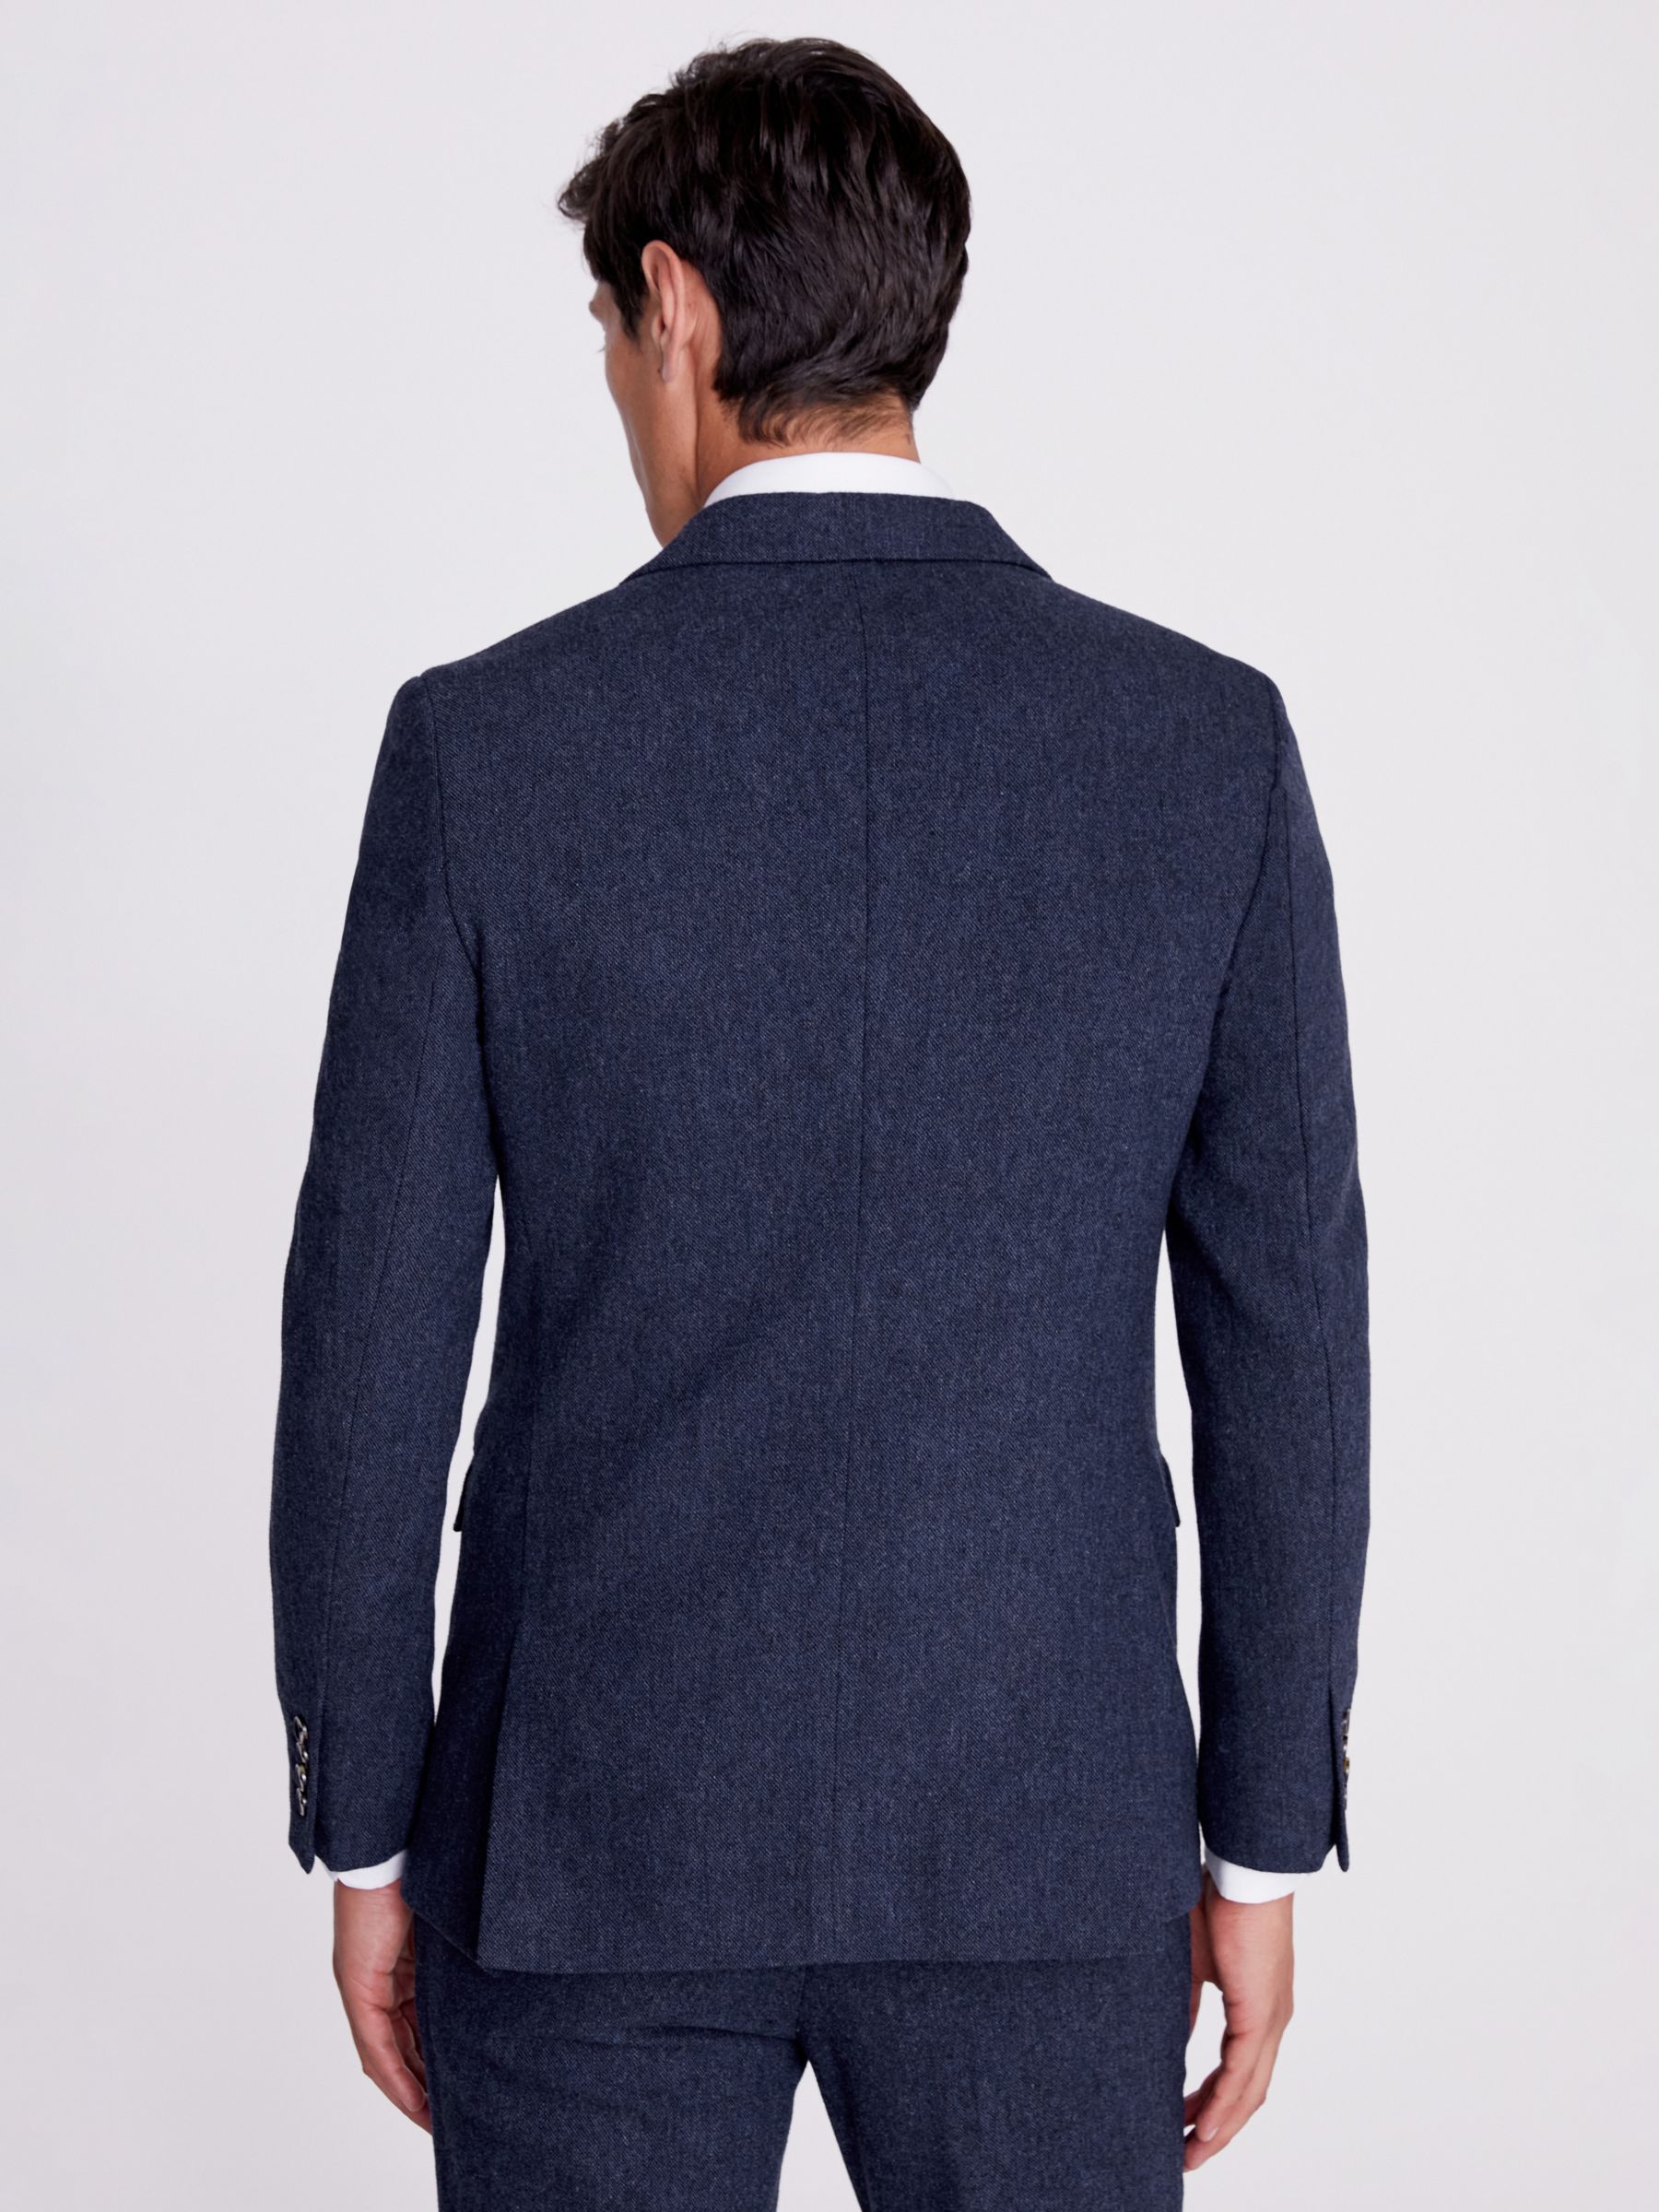 Moss Slim Fit Donegal Tweed Jacket, Blue, 34S